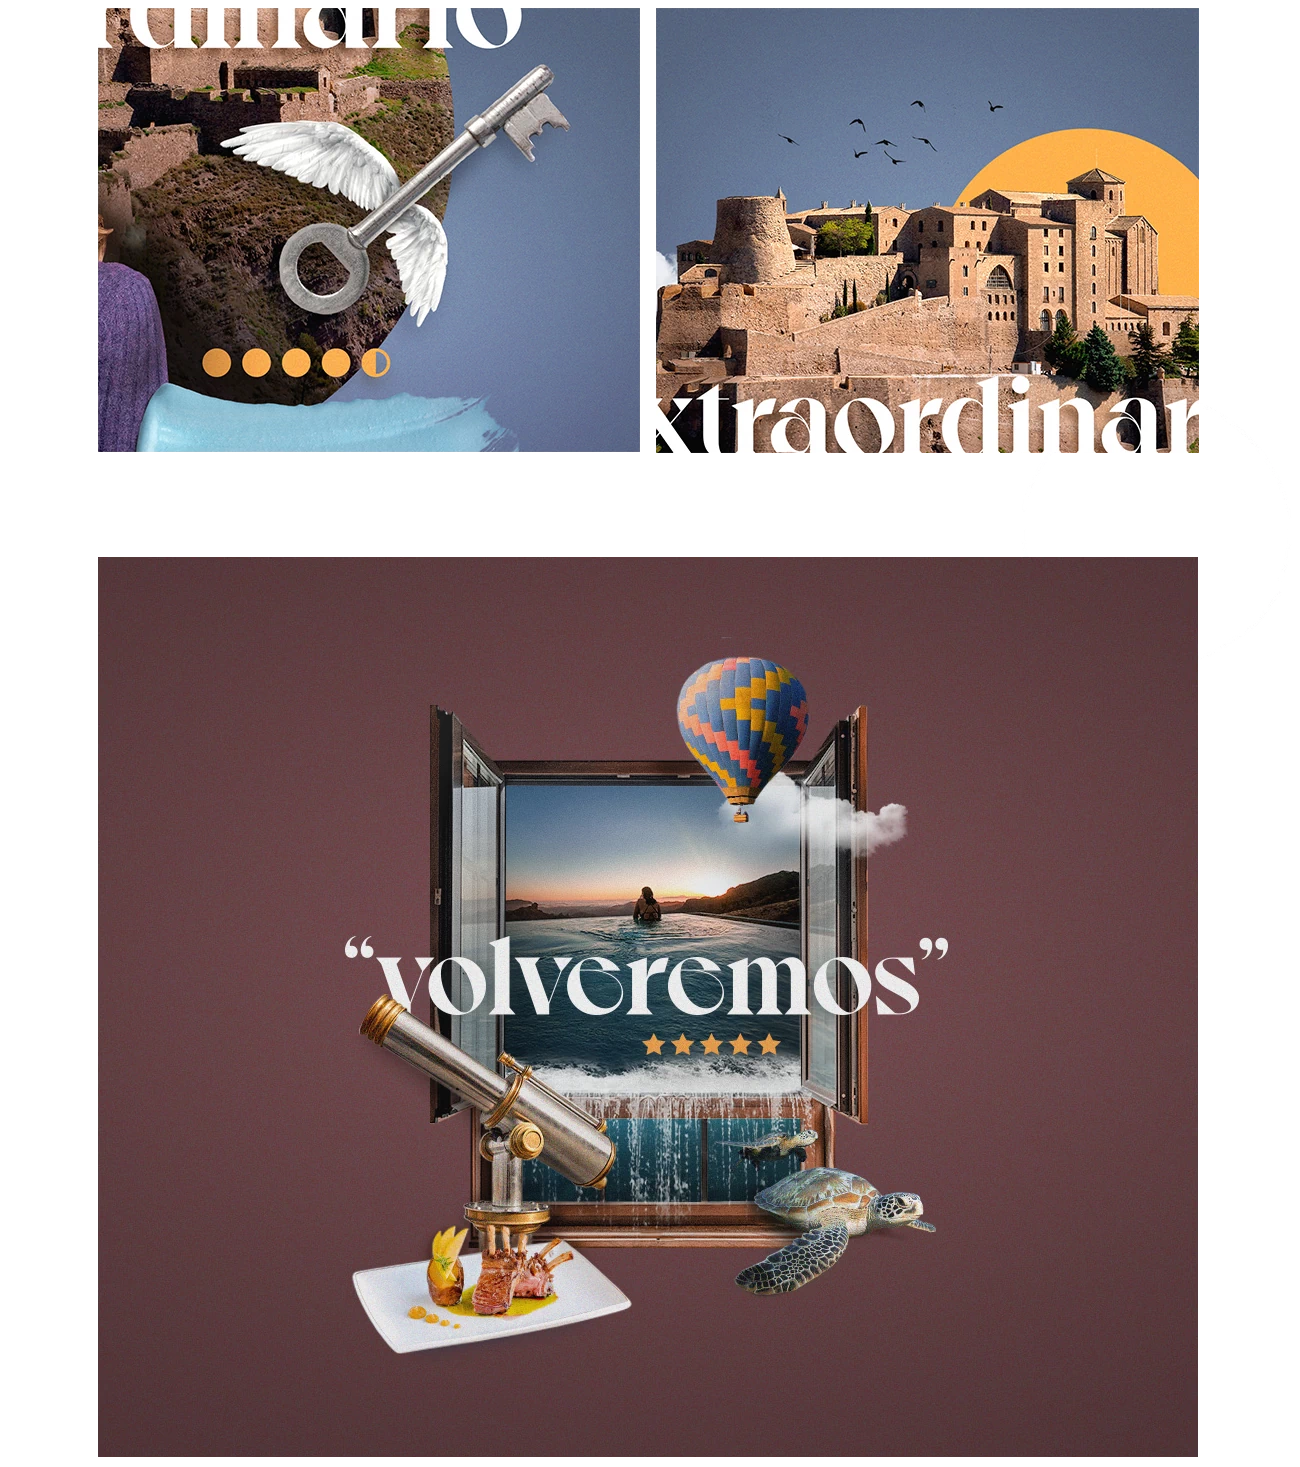 Composición con diferentes detalles de la imagen publicitaria creada para Paradores